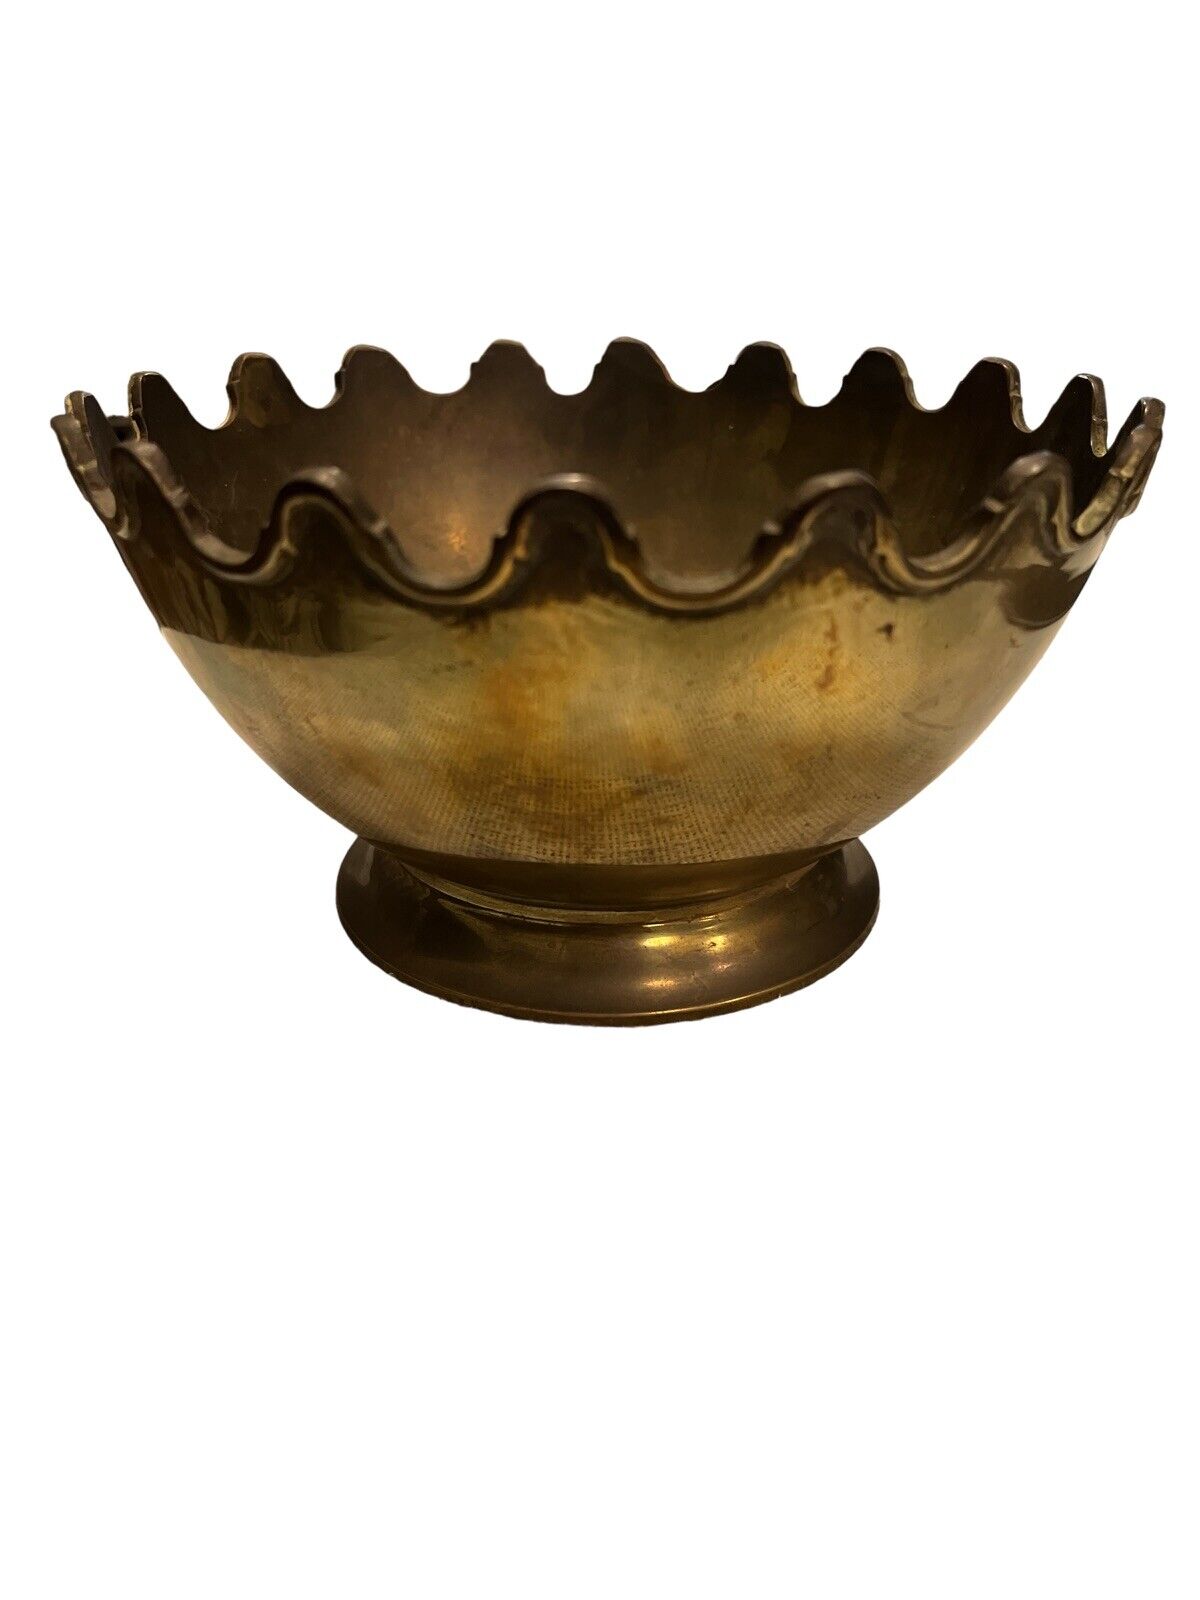 VTG Brass Ornate Scalloped Edged Heavy Solid Brass Bowl 4” x 8”